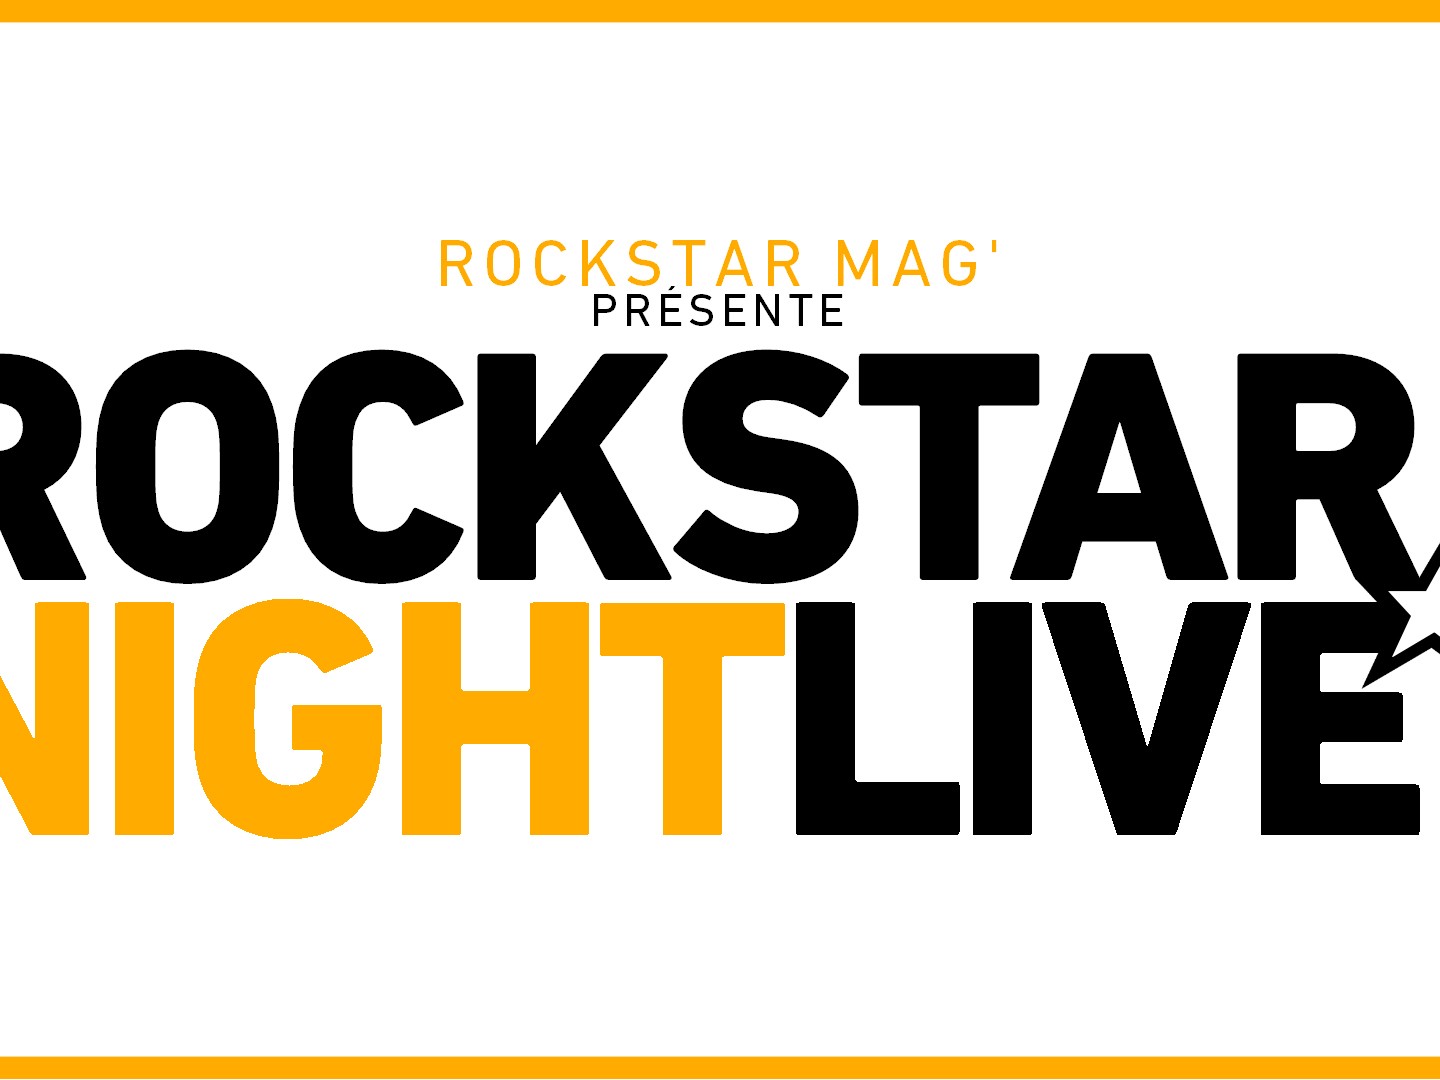 Rockstar Night Live